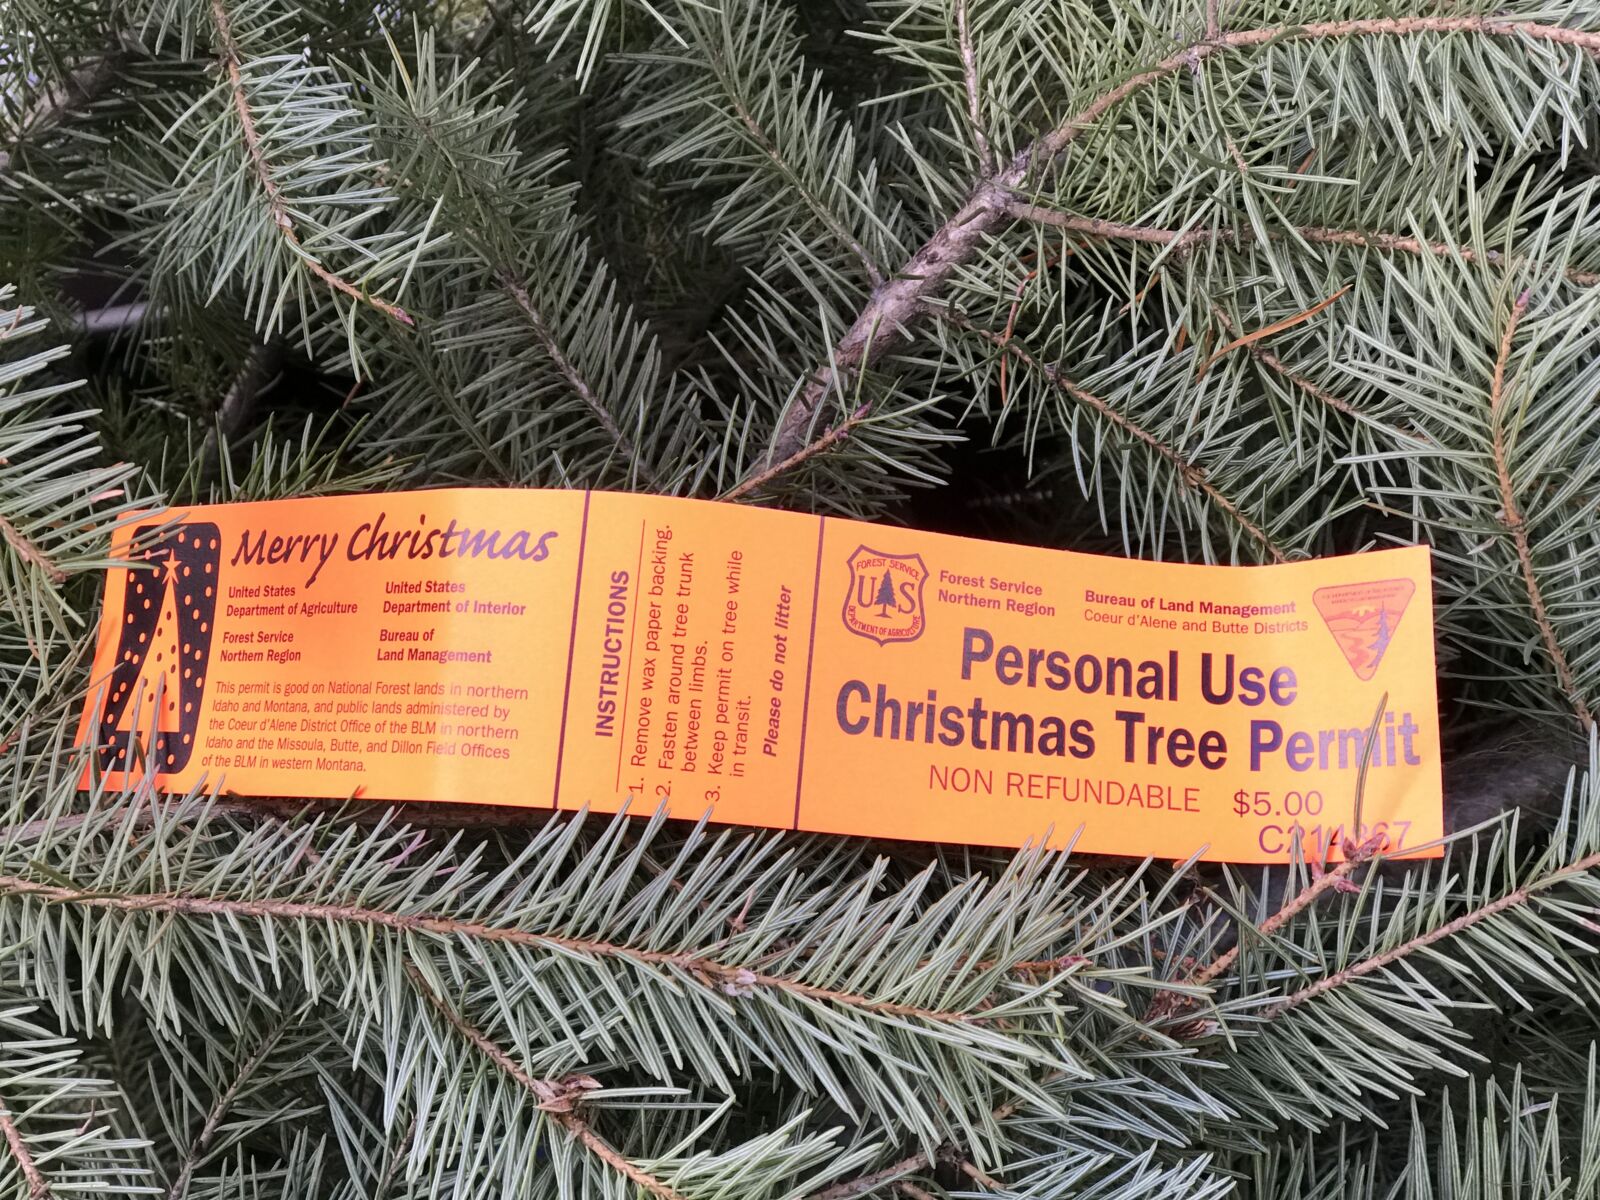 Christmas tree permit